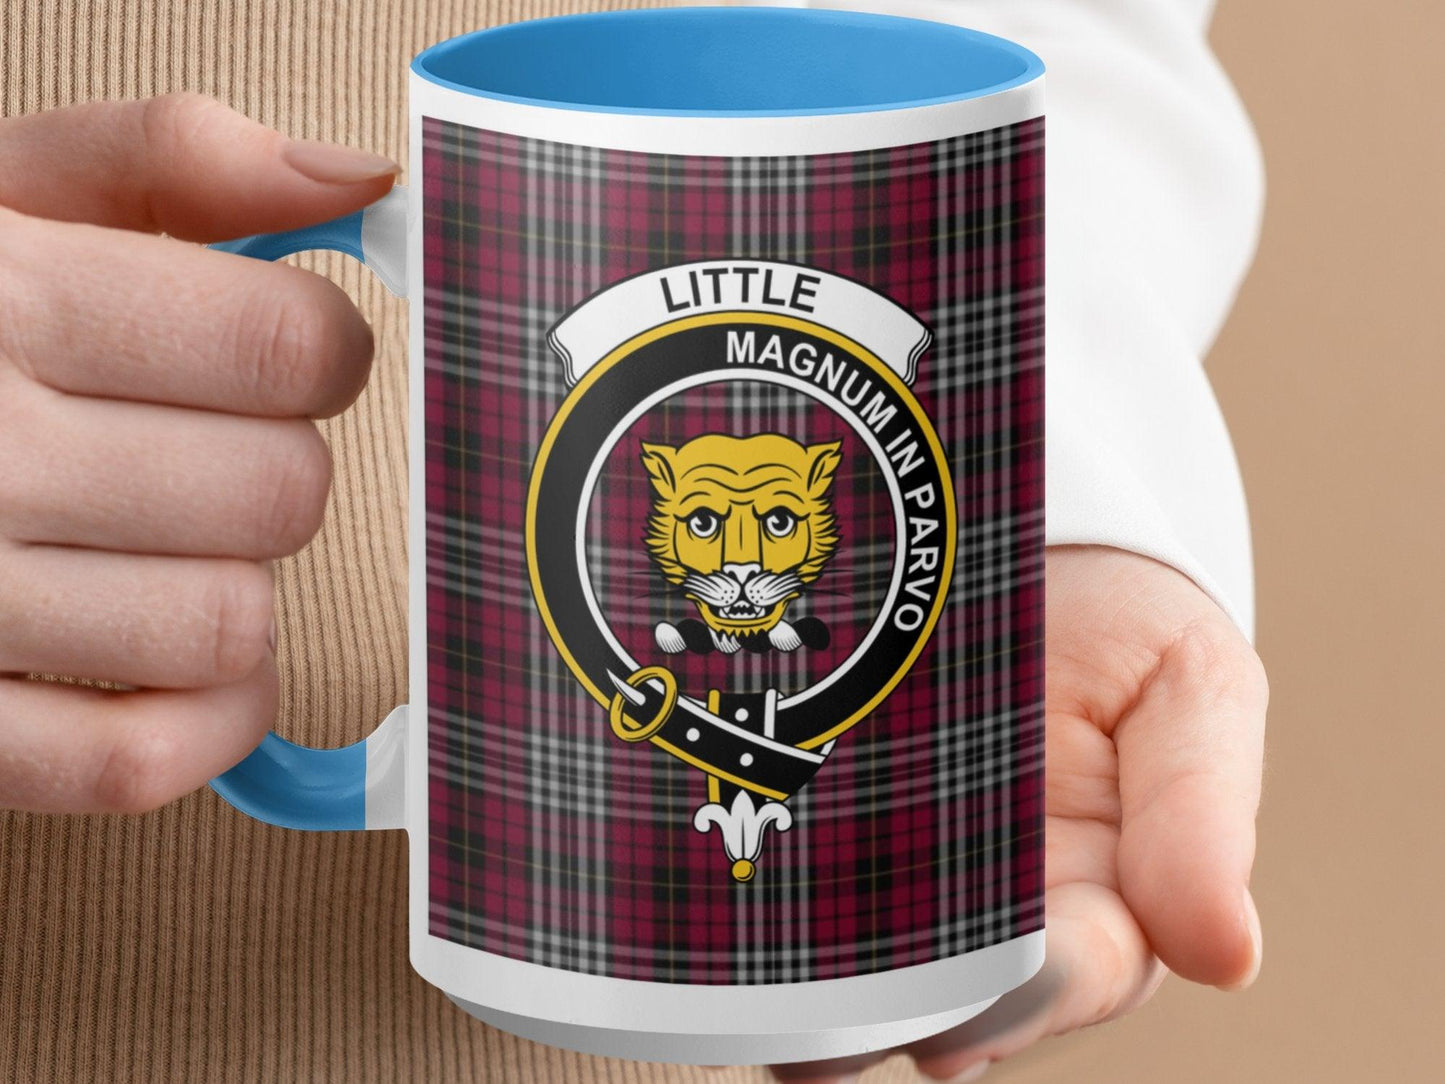 Scottish Clan Little Tartan with Crest Design Mug - Living Stone Gifts